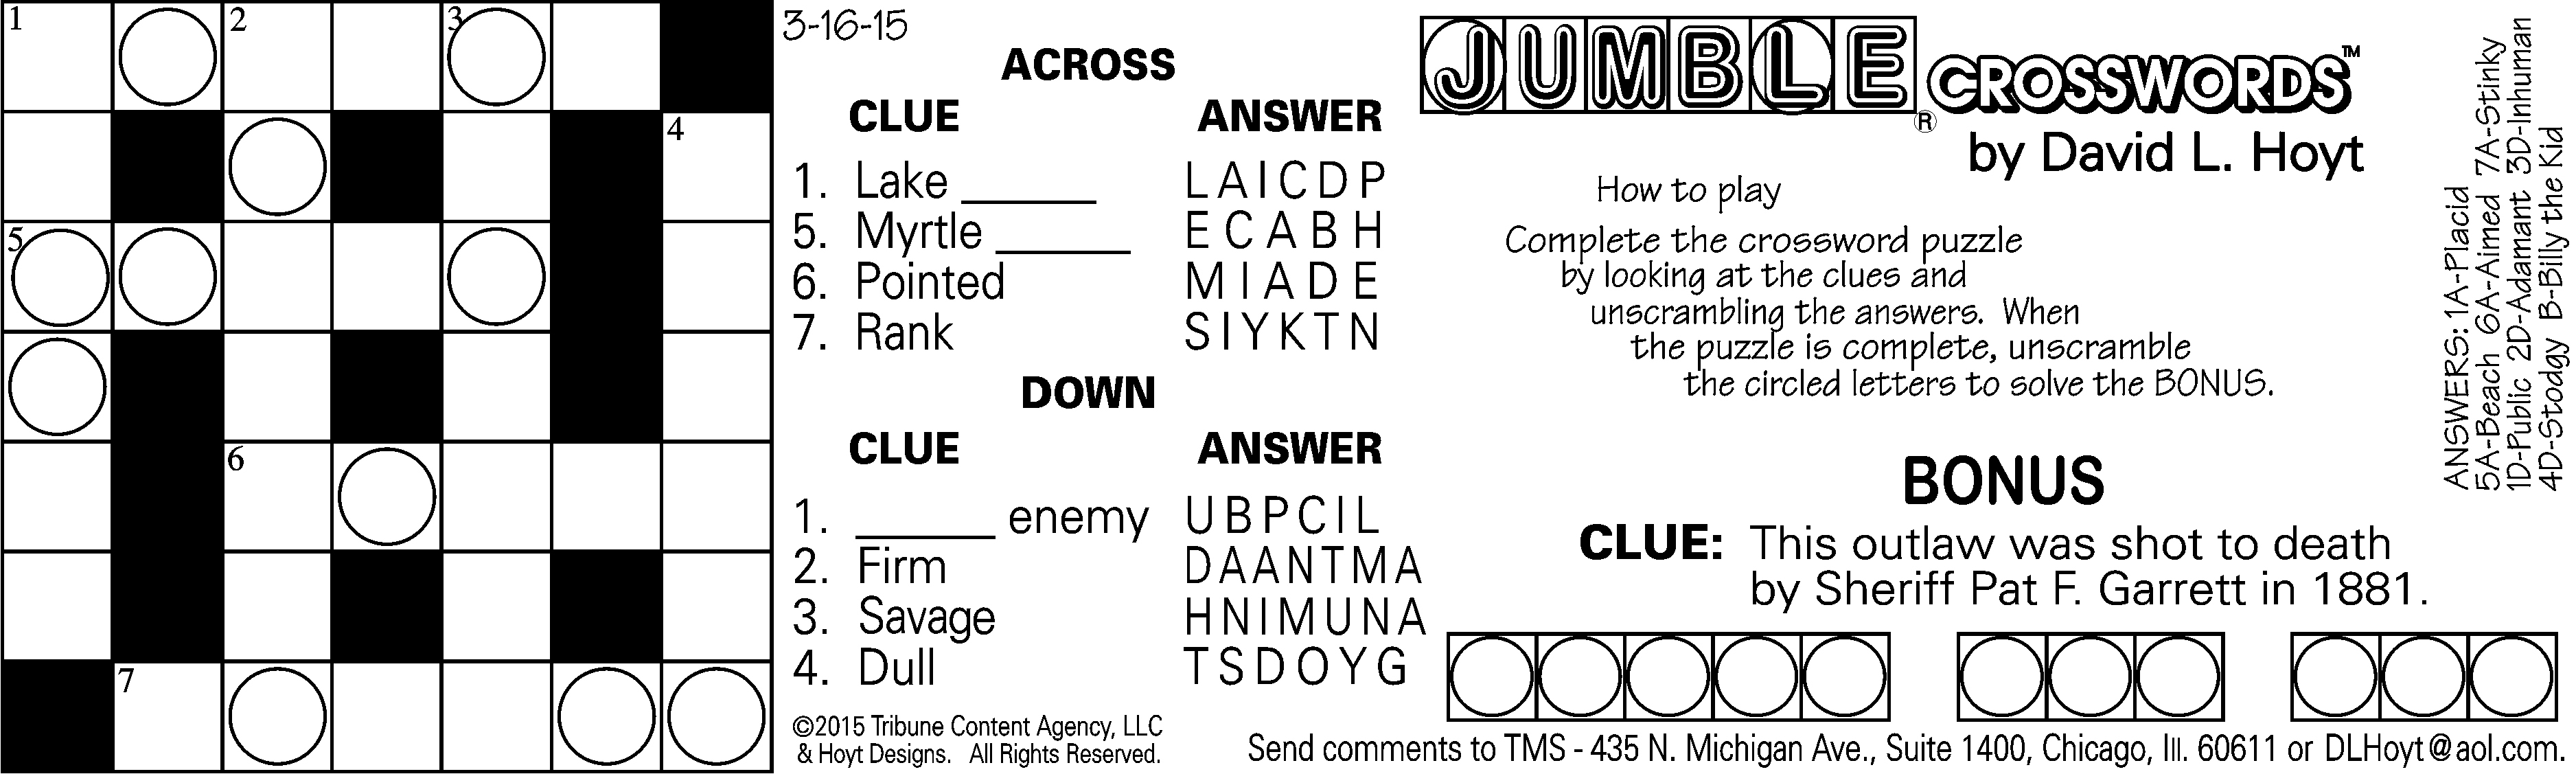 Printable Jumble Crosswords | Printable Crossword Puzzles